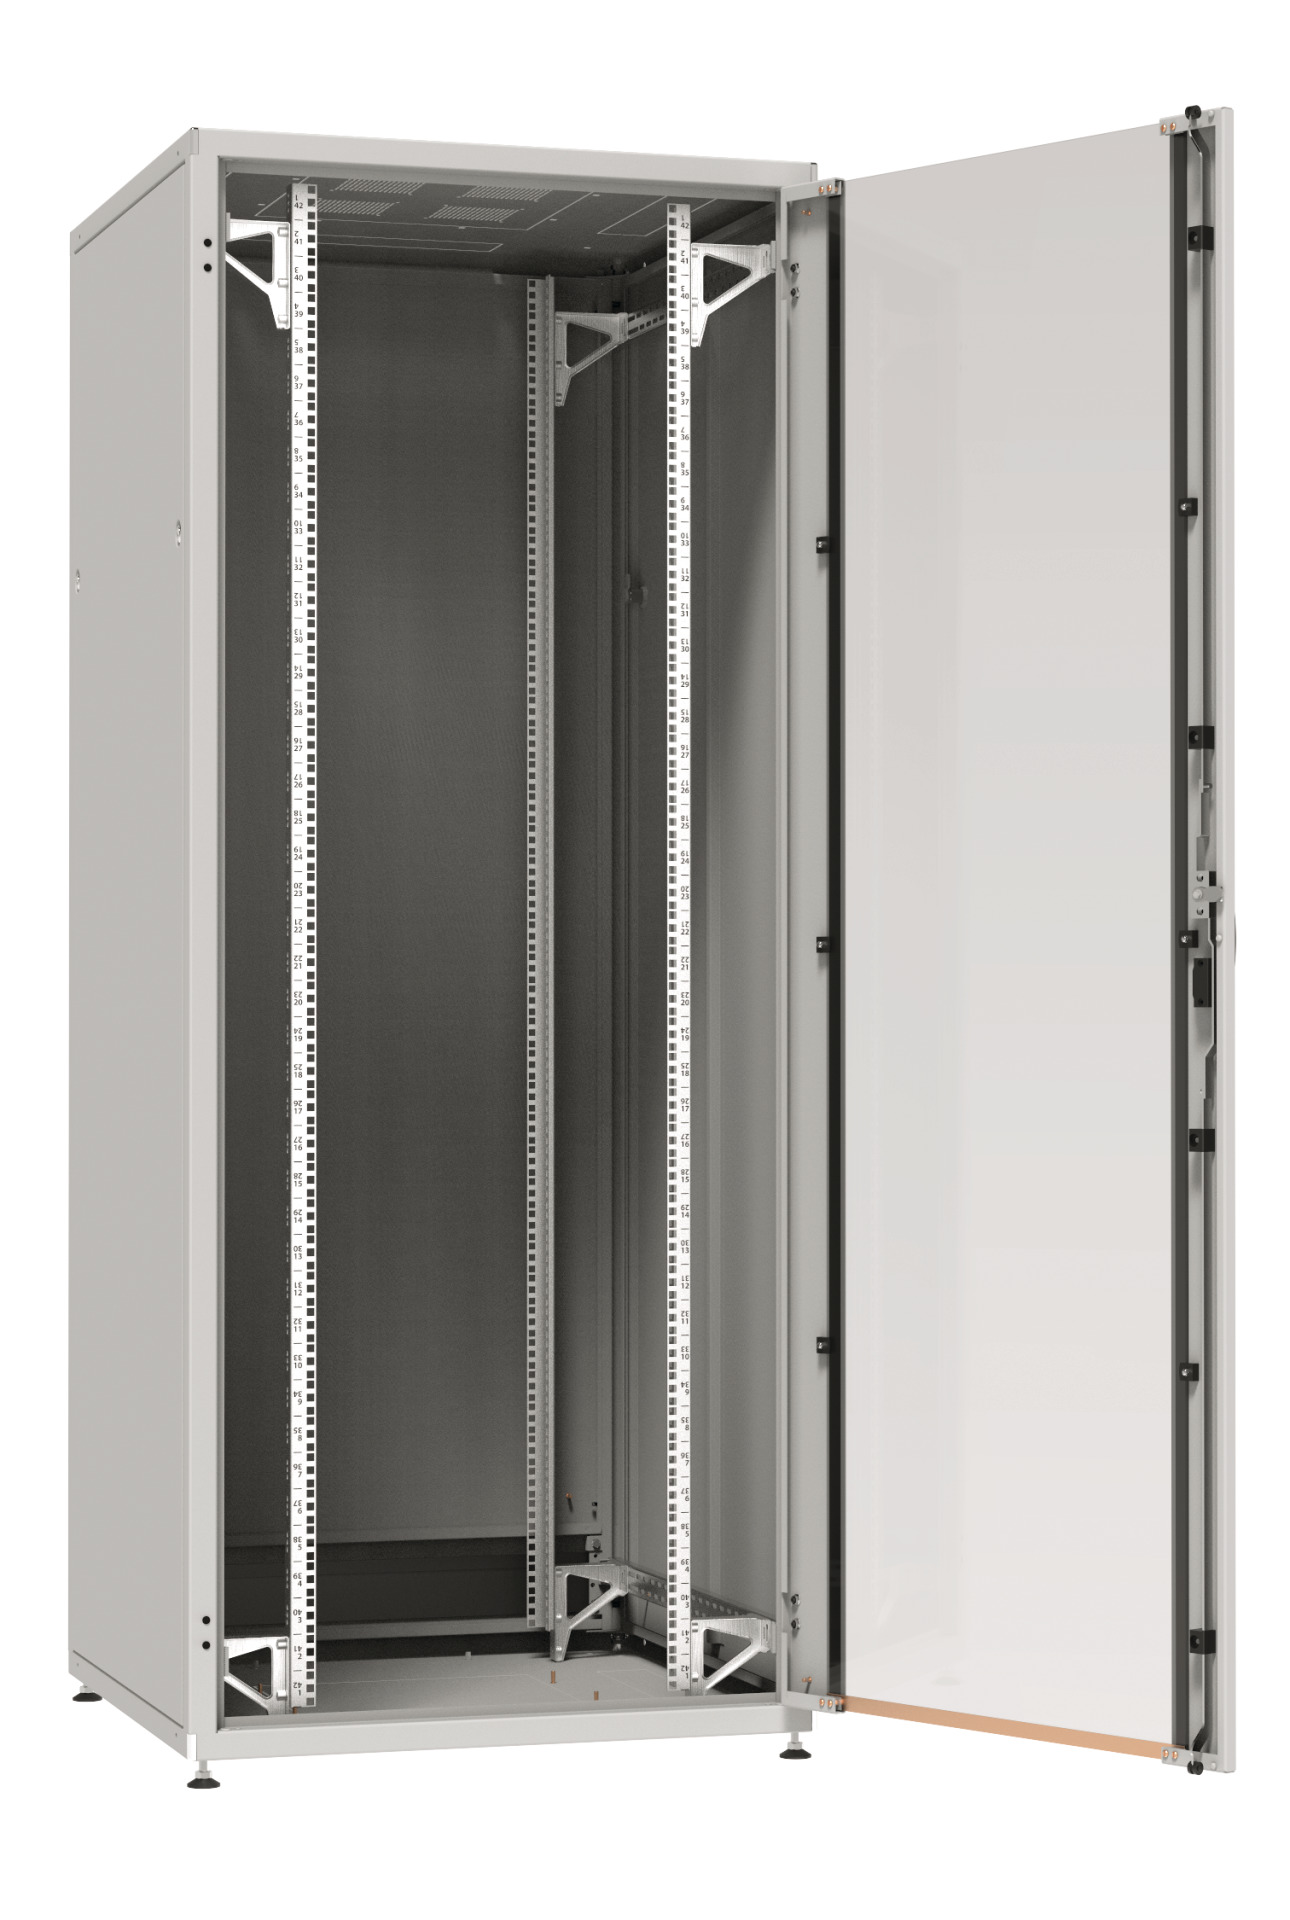 19" Network Cabinet PRO 18U, 800x800 mm, RAL7035